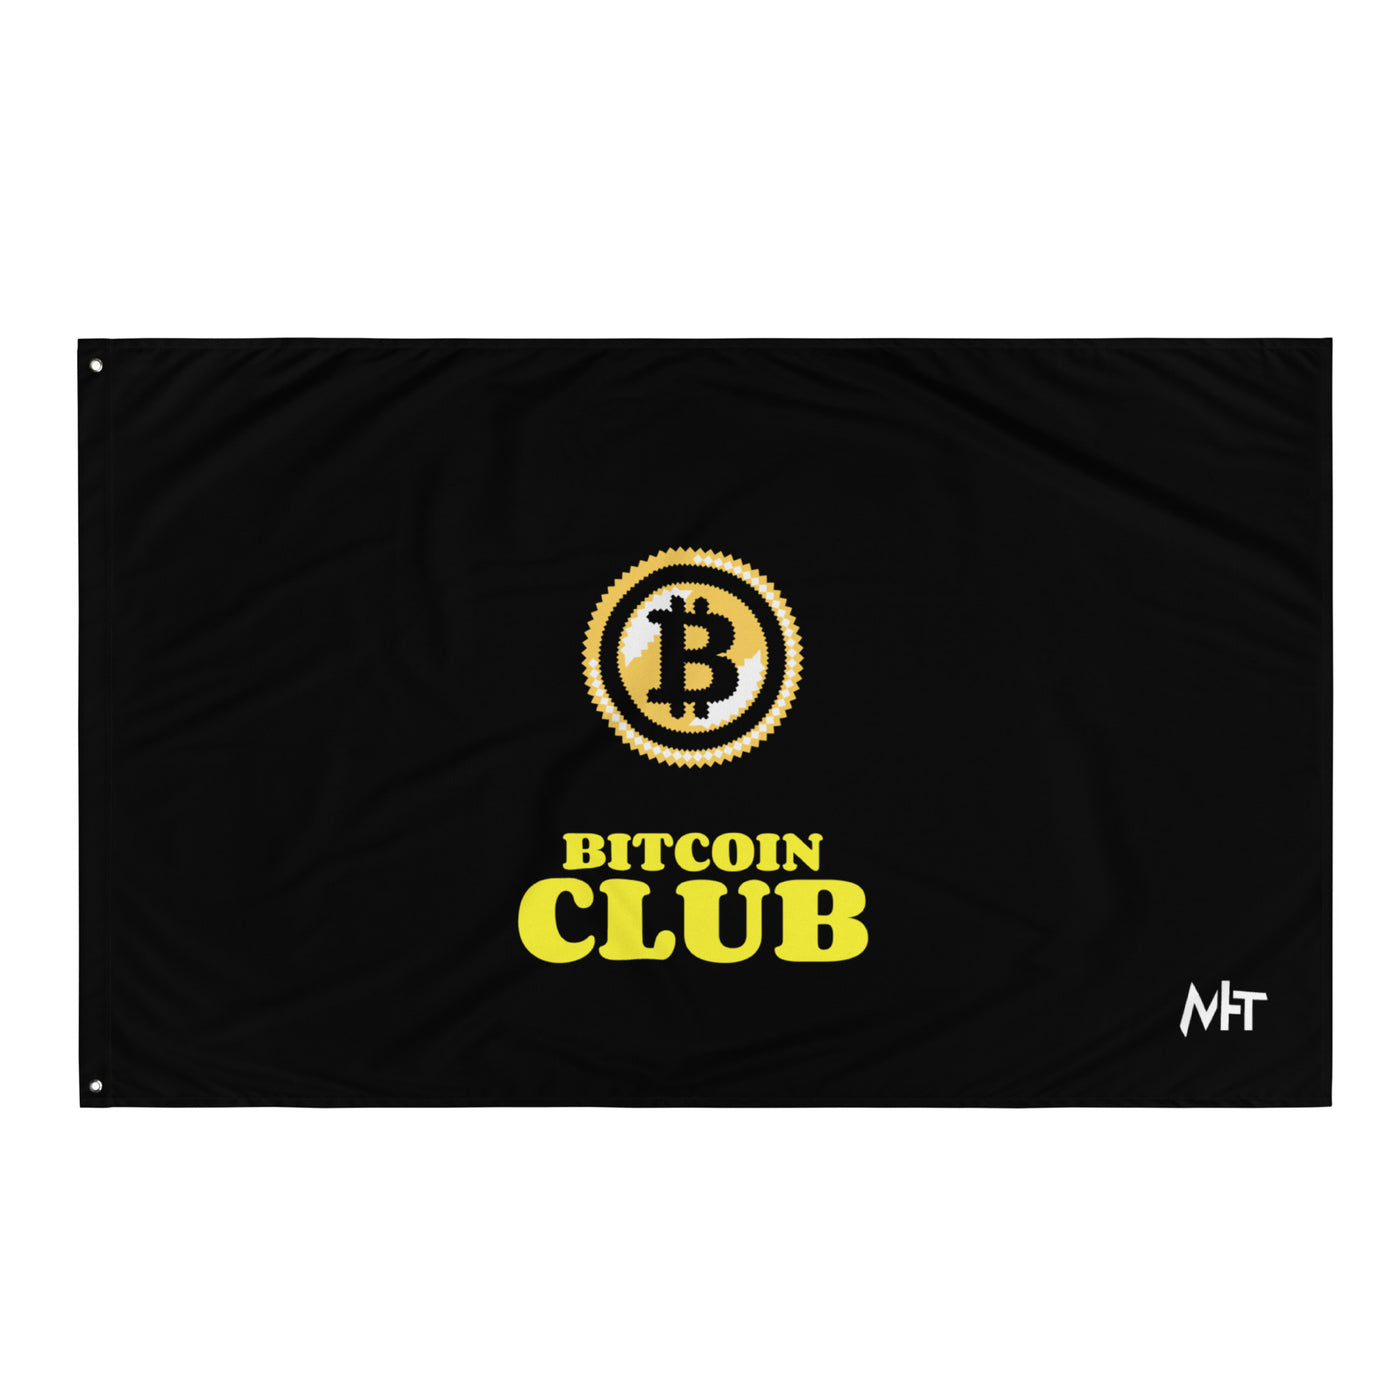 BITCOIN CLUB t-shirt design maker featuring 8-bit style Flag